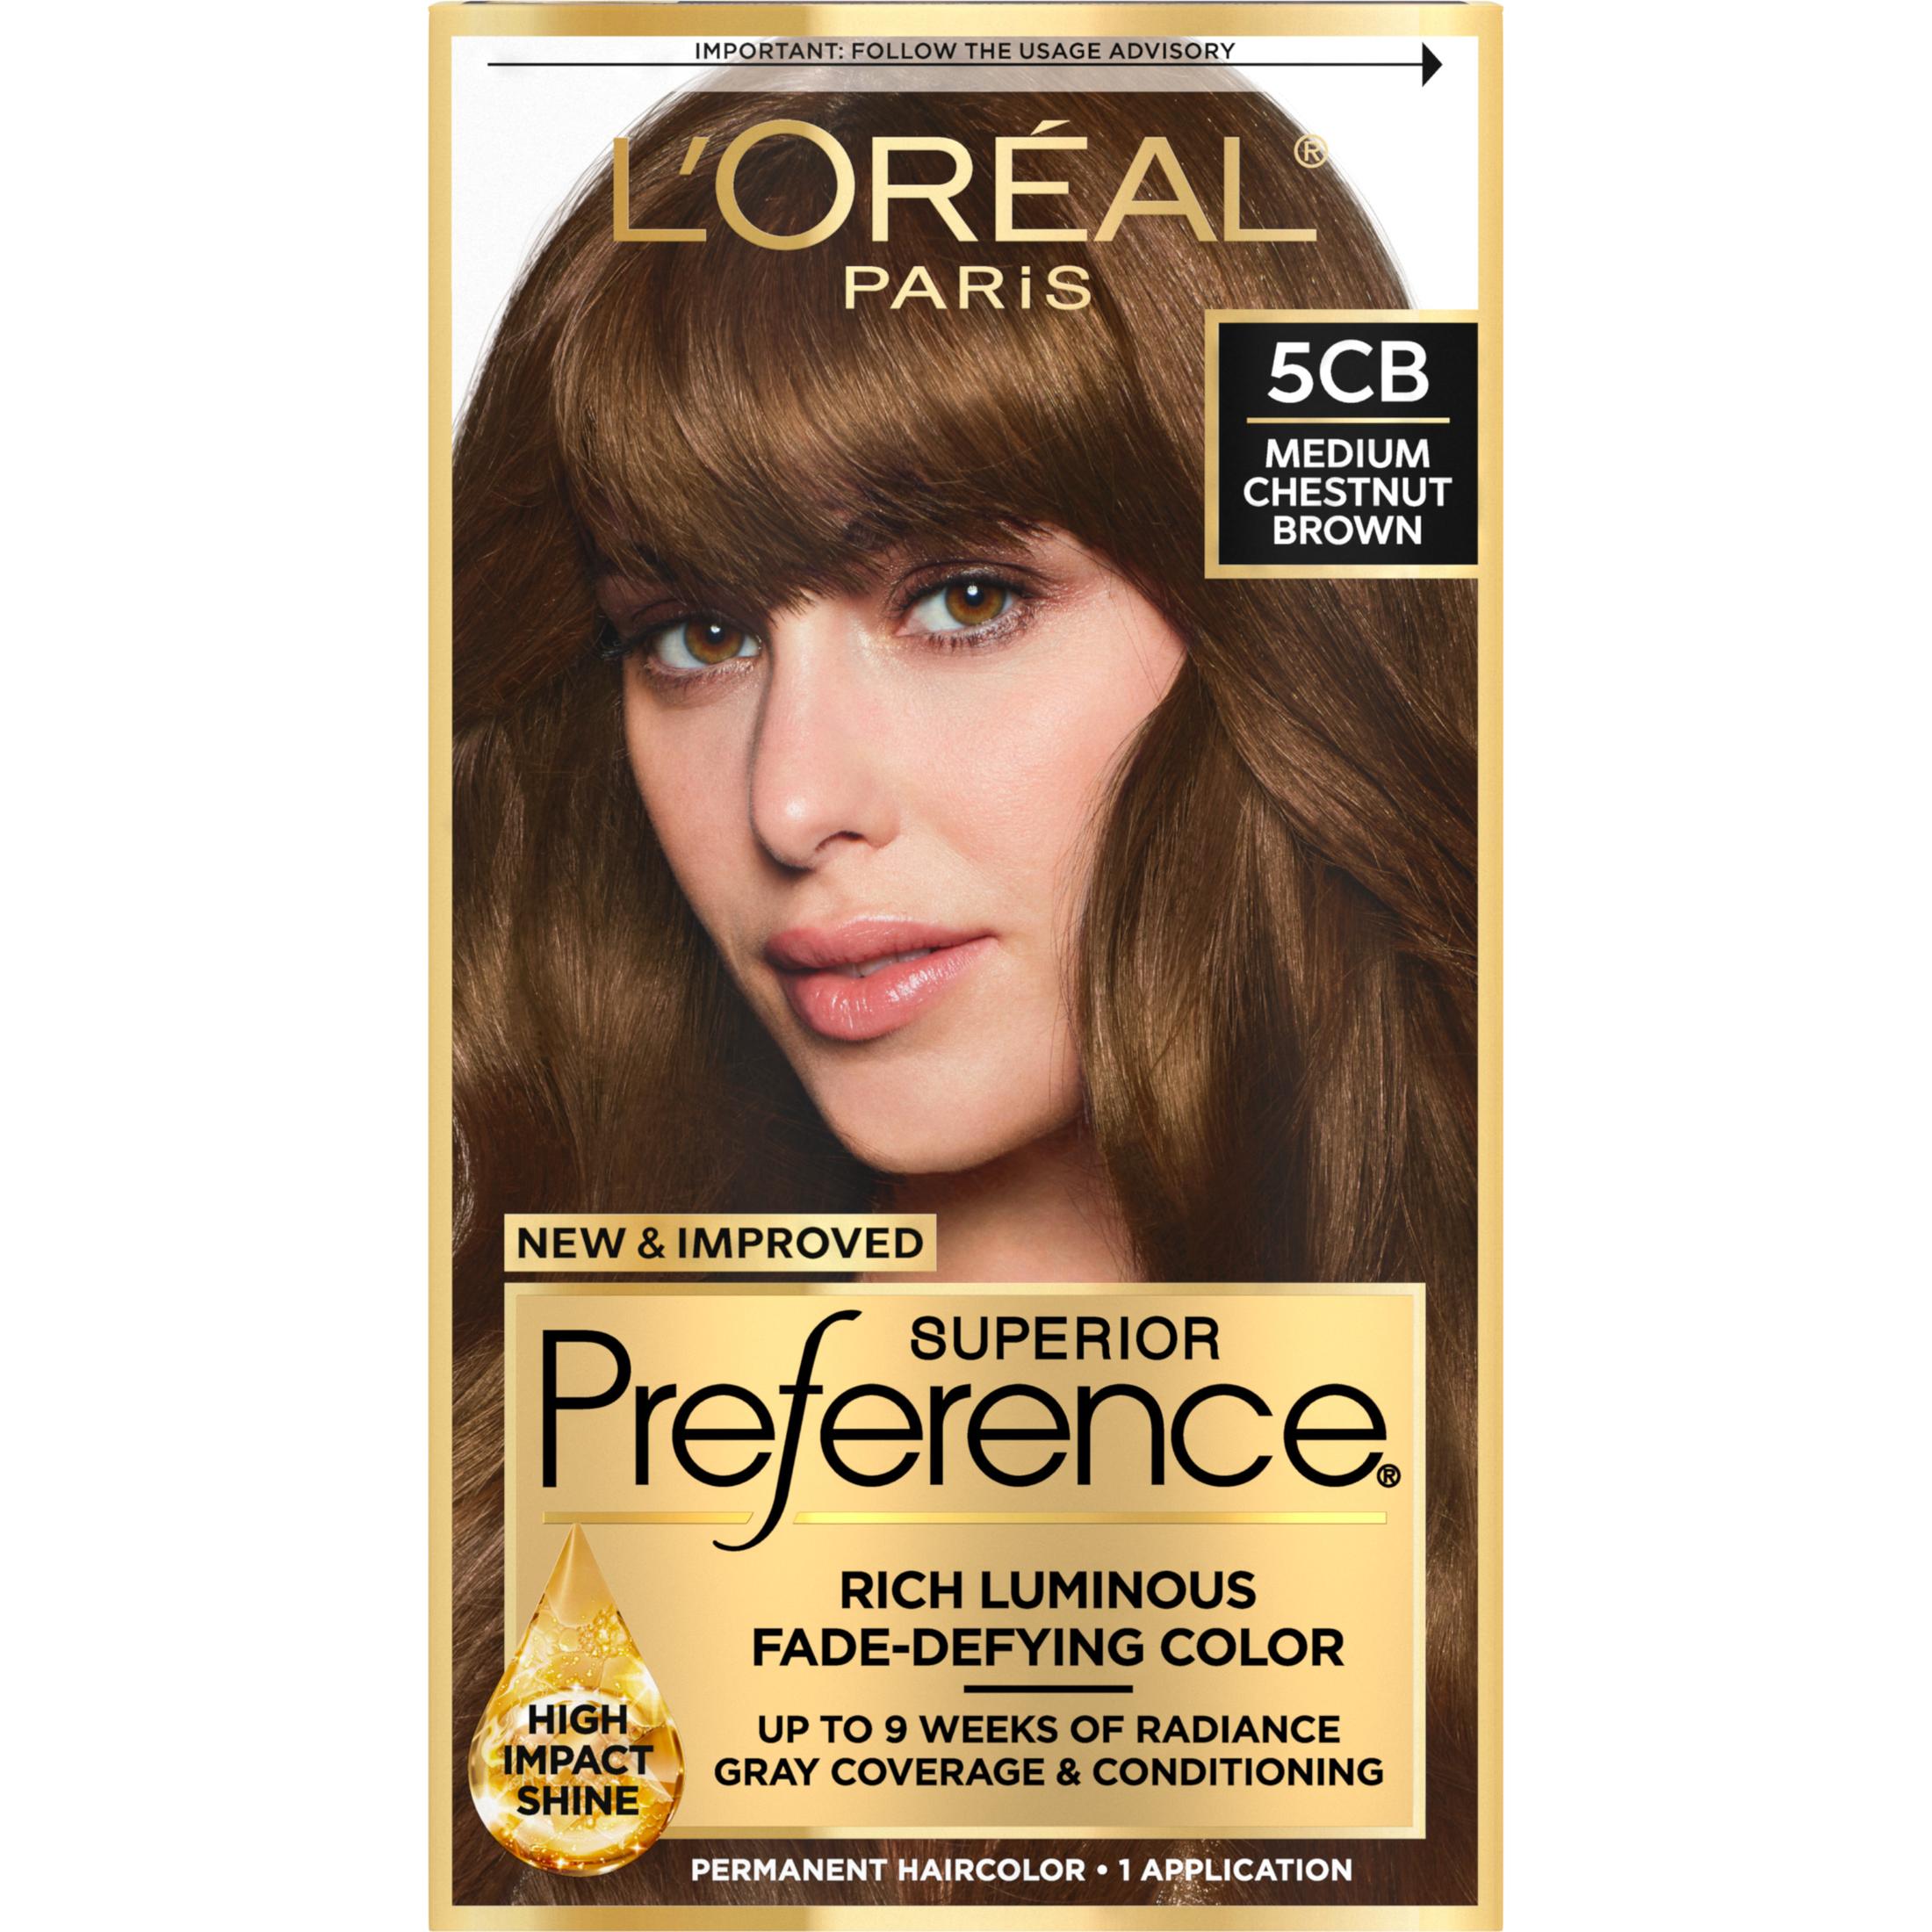 L'Oreal Paris Superior Preference Fade Defying Permanent Haircolor, 5CB Medium Chestnut Brown, 1 kit - image 1 of 9